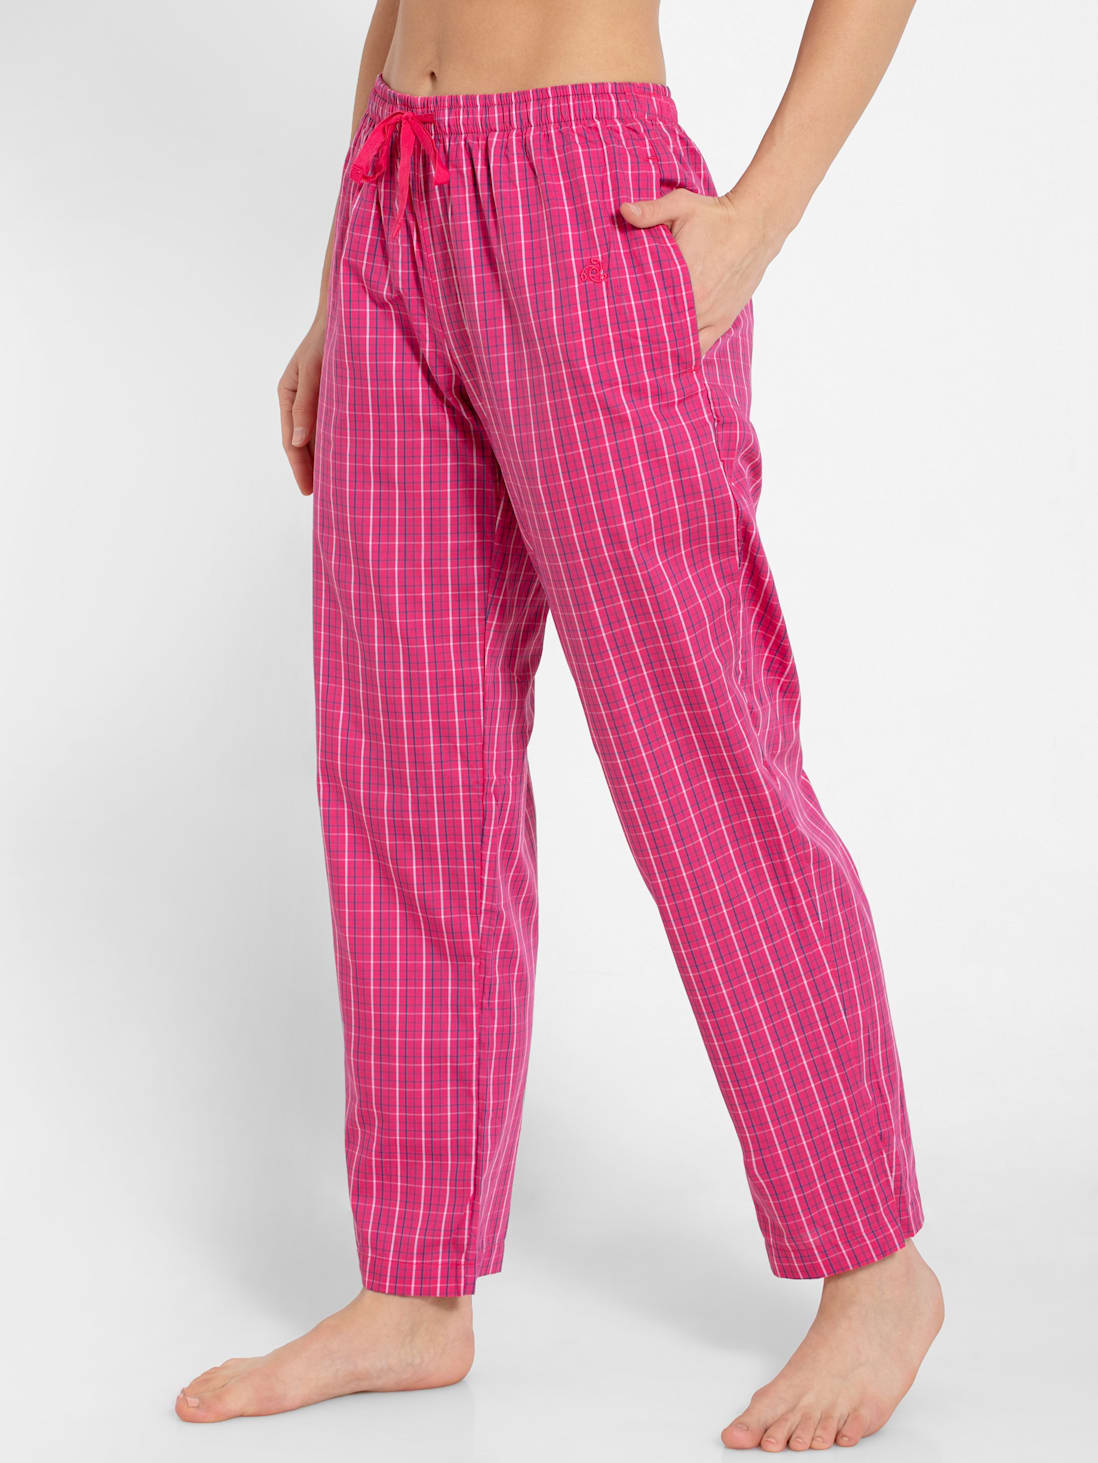 Pyjamas for Women Buy Cotton Pyjamas for Women Online at Best Price   Jockey India